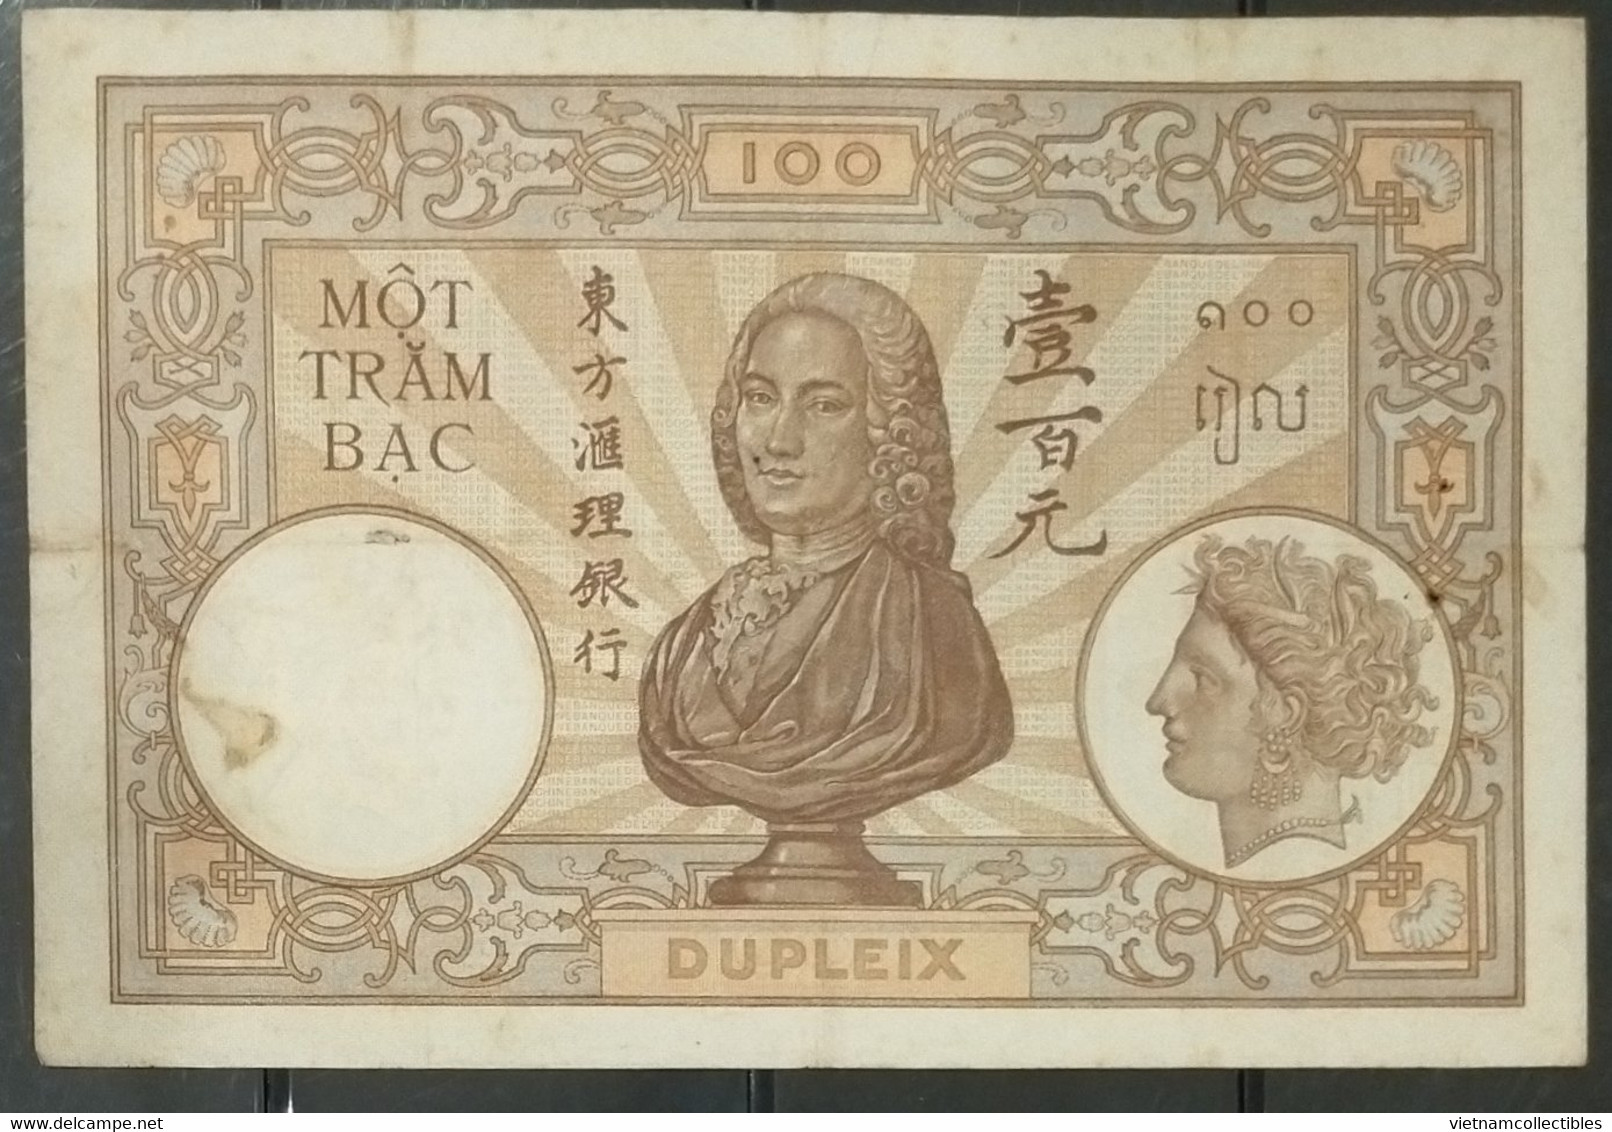 French Indochine Indochina Vietnam Viet Nam Laos Cambodia 100 Piastres VF Banknote Note 1925-39 - Pick # 51d / 02 Photo - Indochina